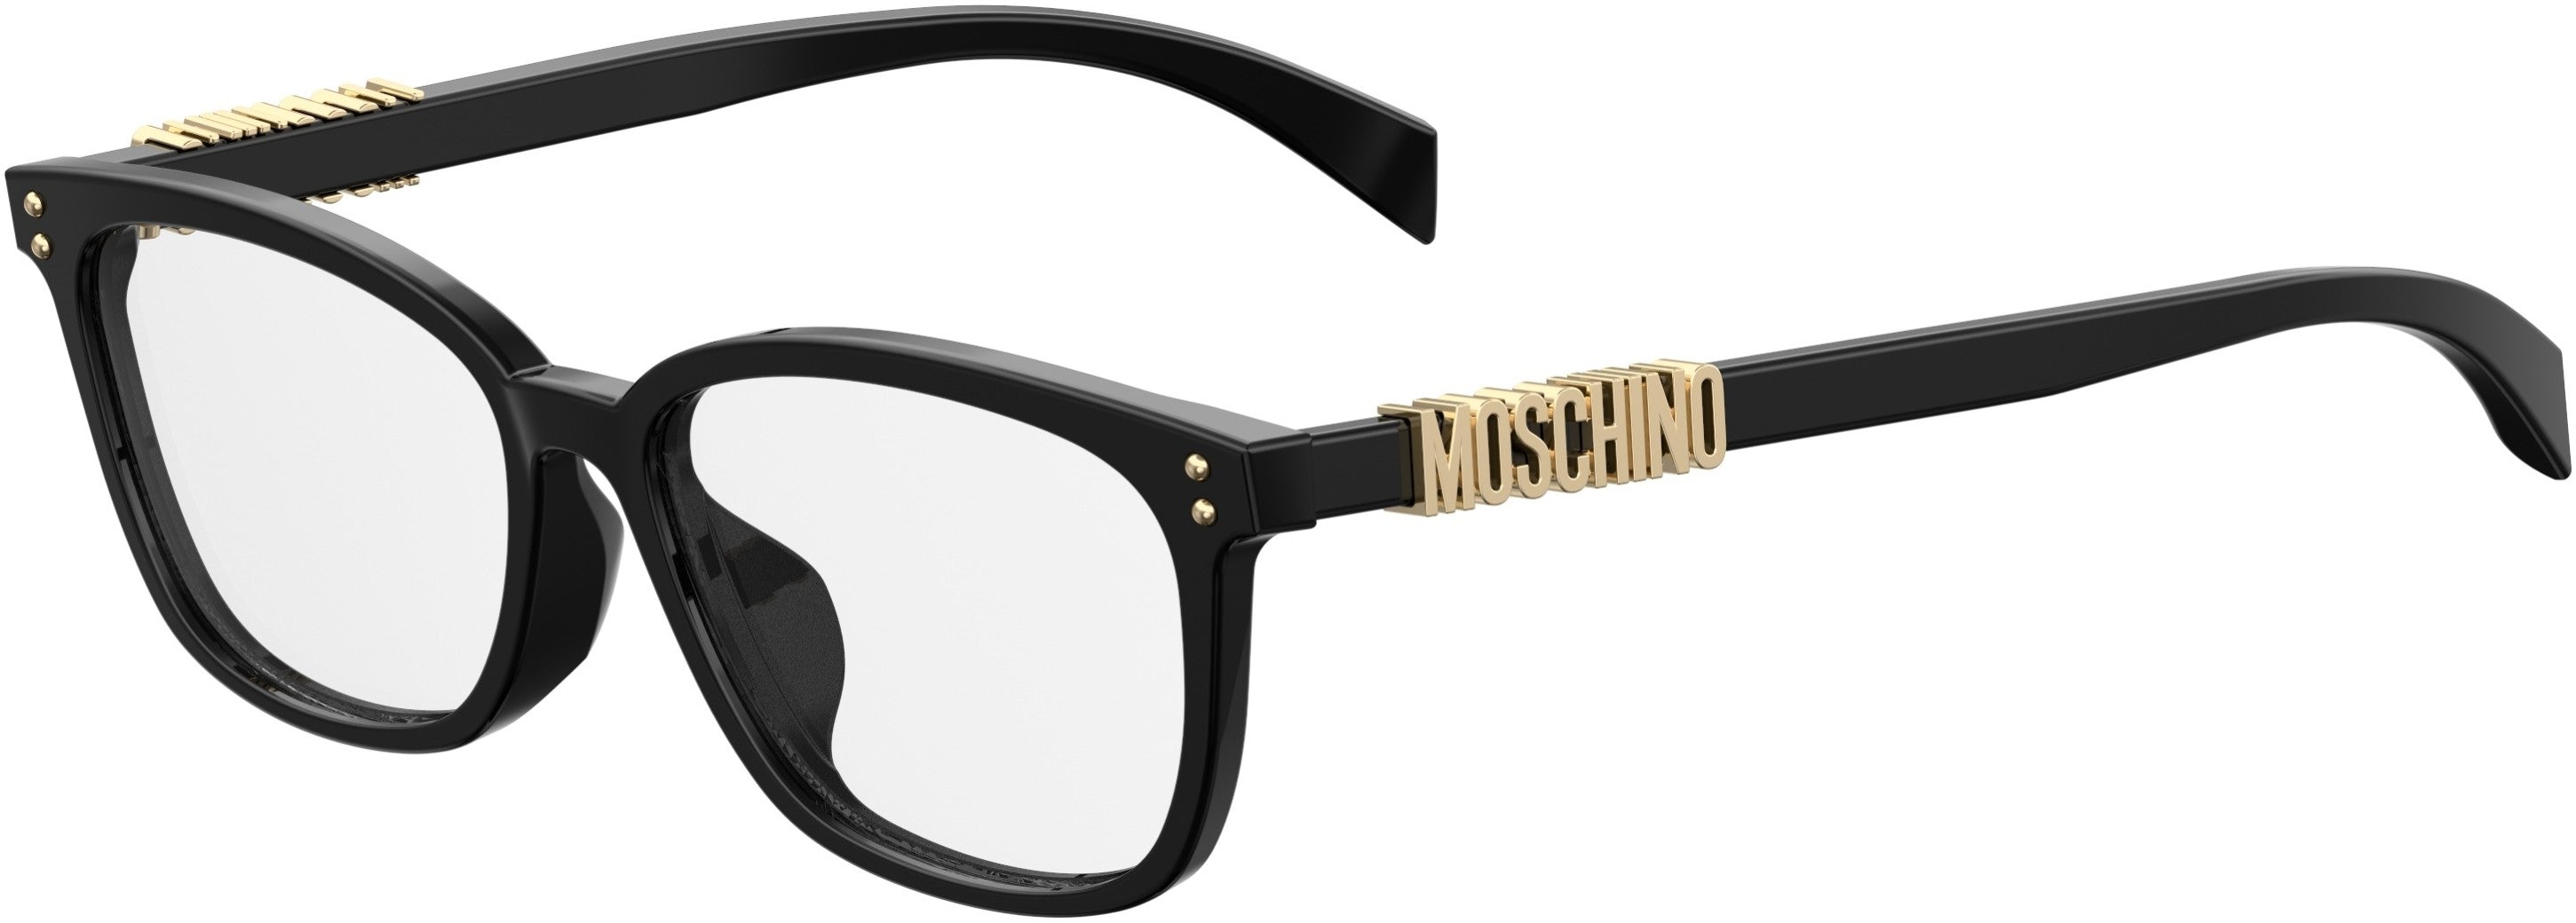  Moschino 515/F Rectangular Eyeglasses 0807-0807  Black (00 Demo Lens)